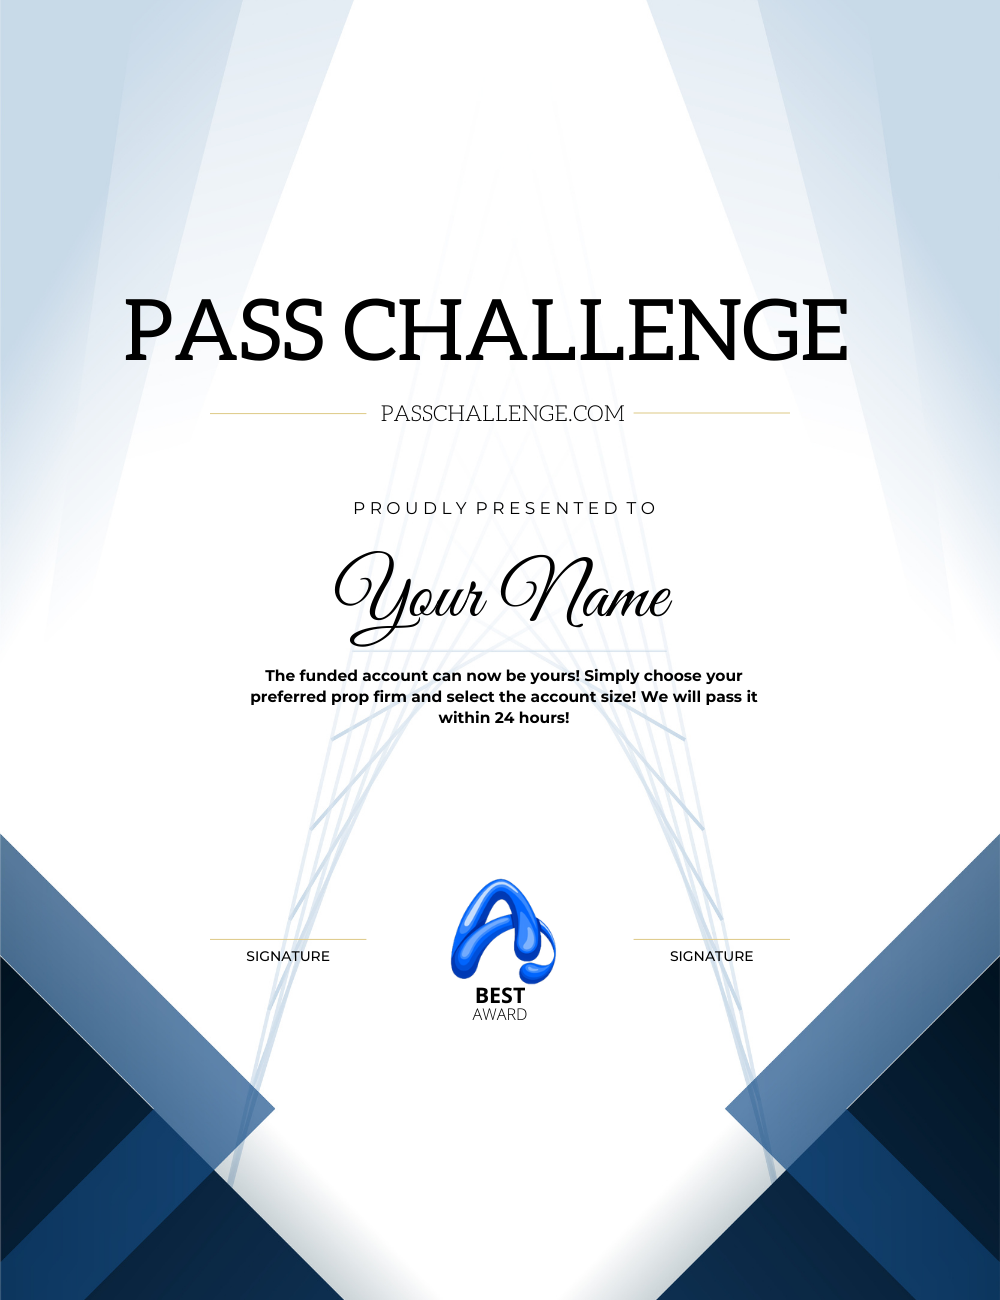 Pass Challenge service